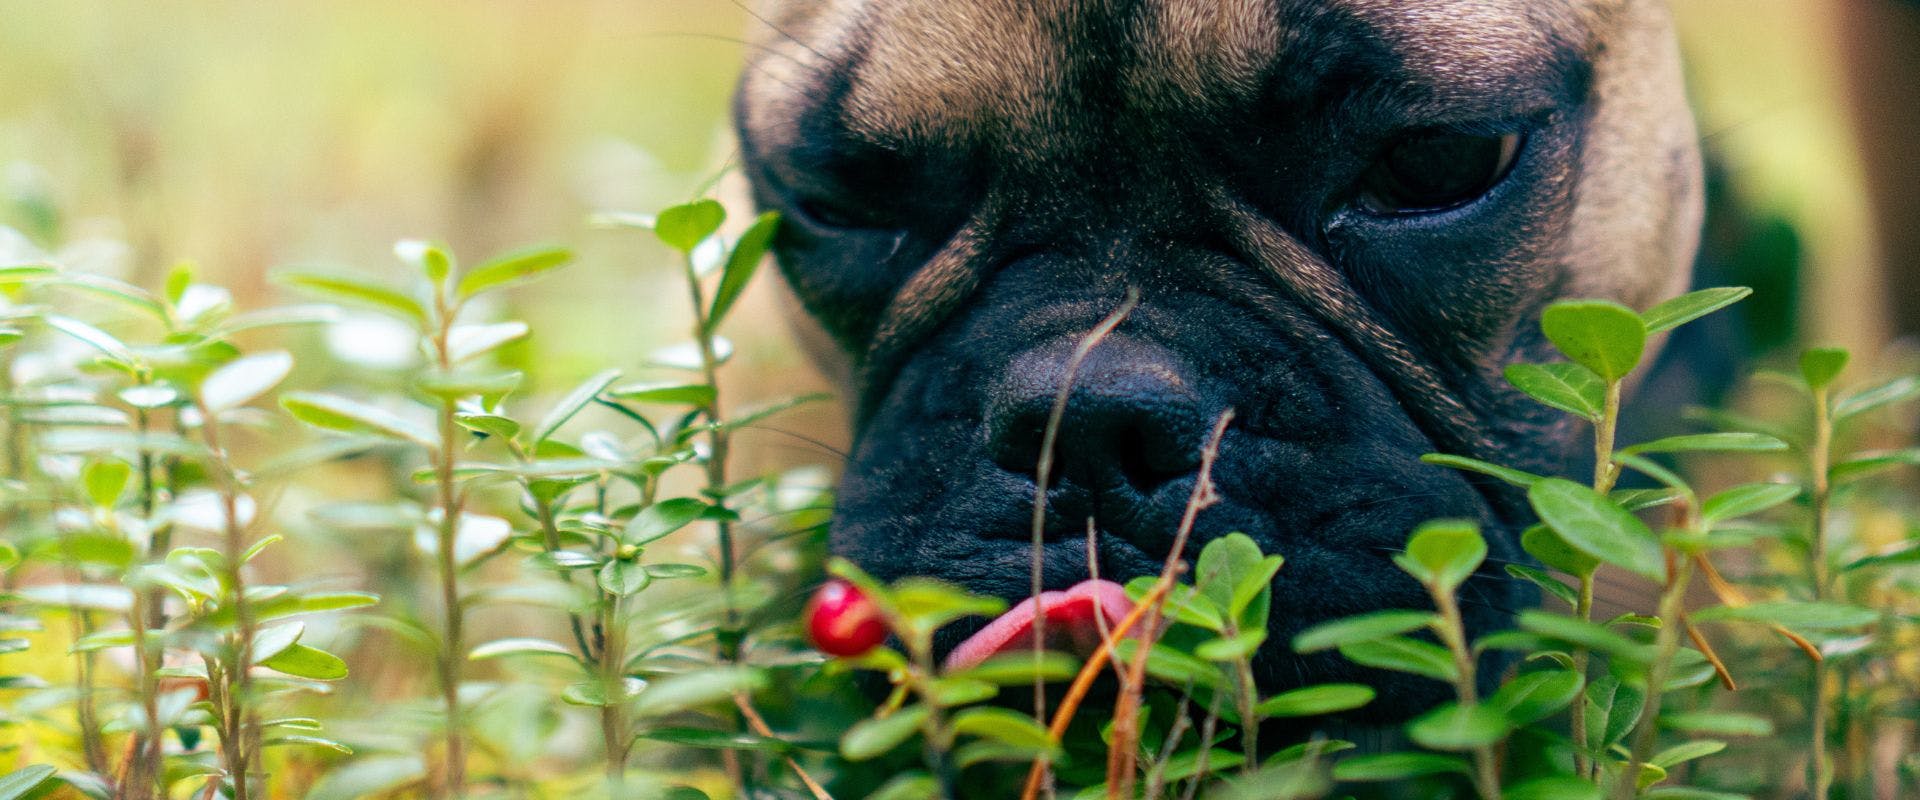 French Bulldog sniffing cranberry bush